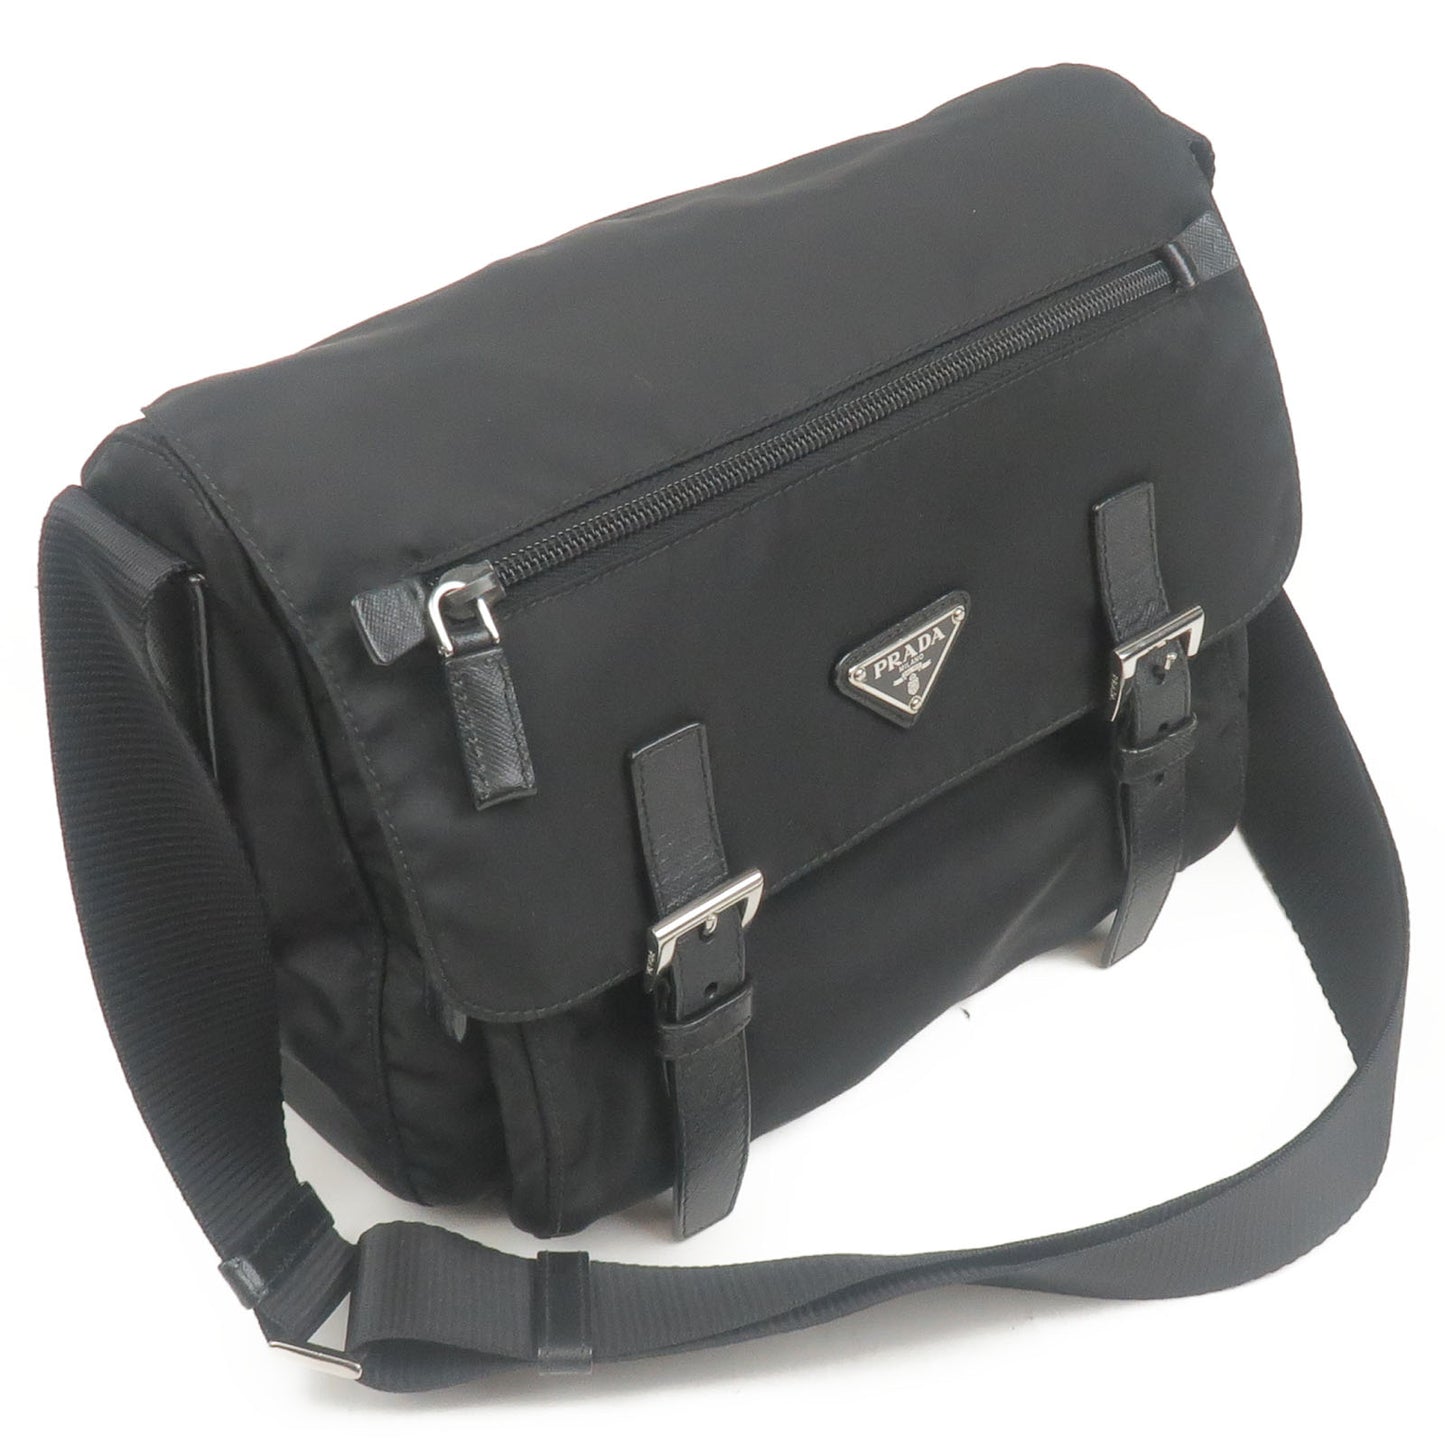 PRADA Nylon Leather Shoulder Bag Purse NERO Black BT0953